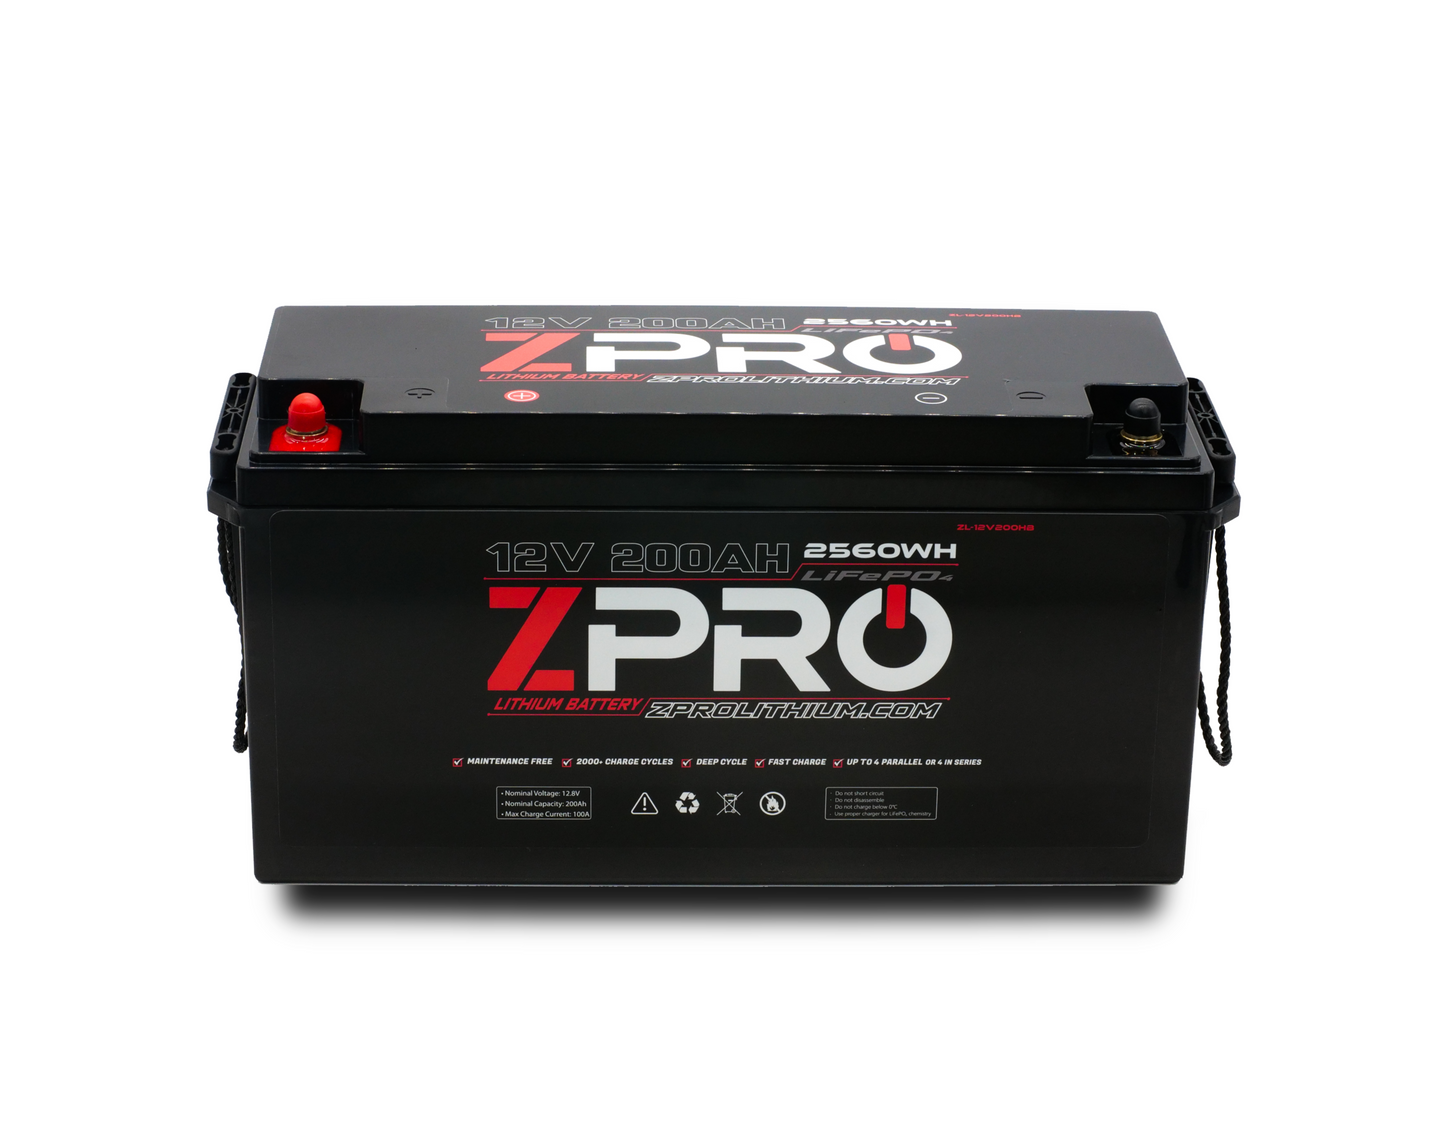 ZPRO Lithium 12V 200aH Lithium Battery